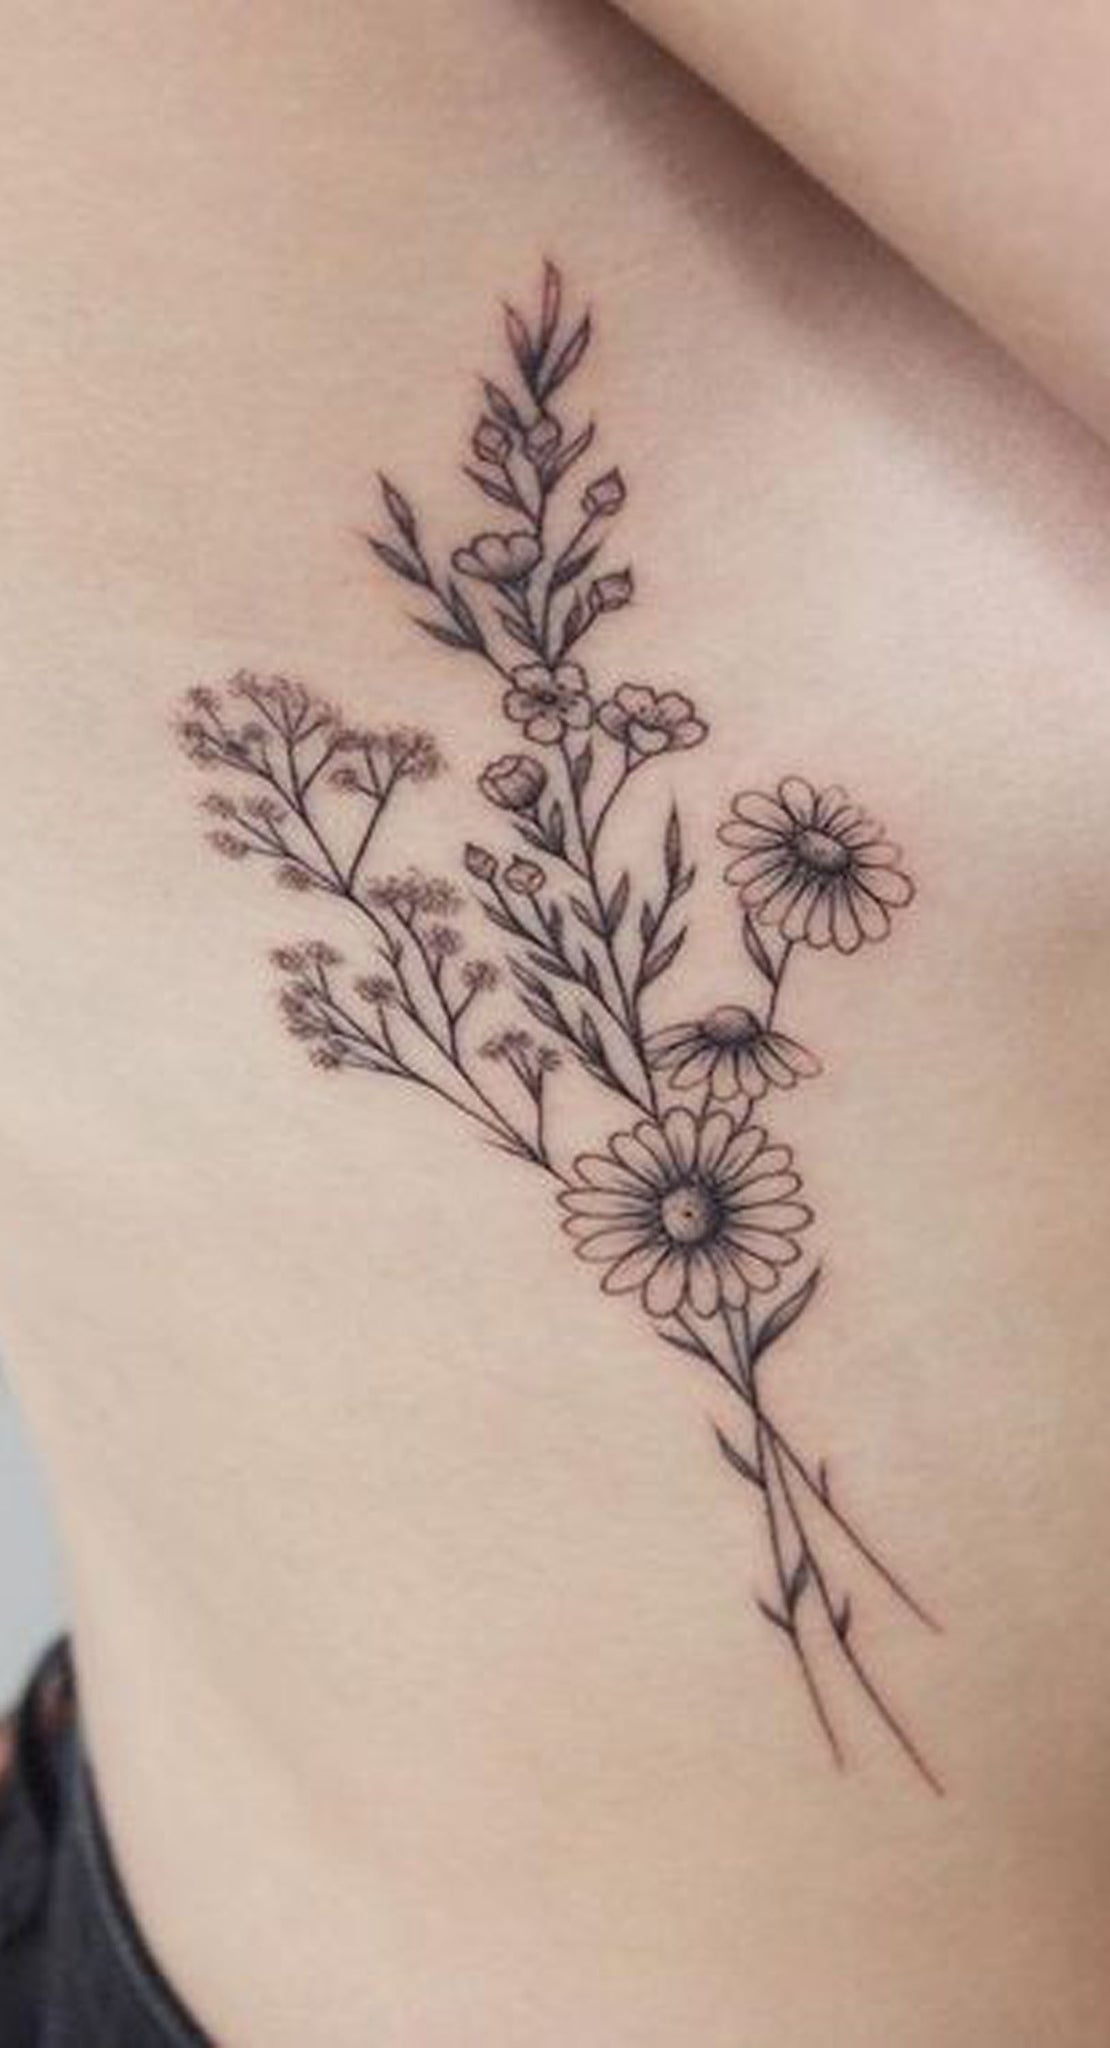 Wild Flower Sunflower Rib Tattoo Ideas for Women - Black and White Delicate Side Tat - www.MyBodiArt.com #tattoo